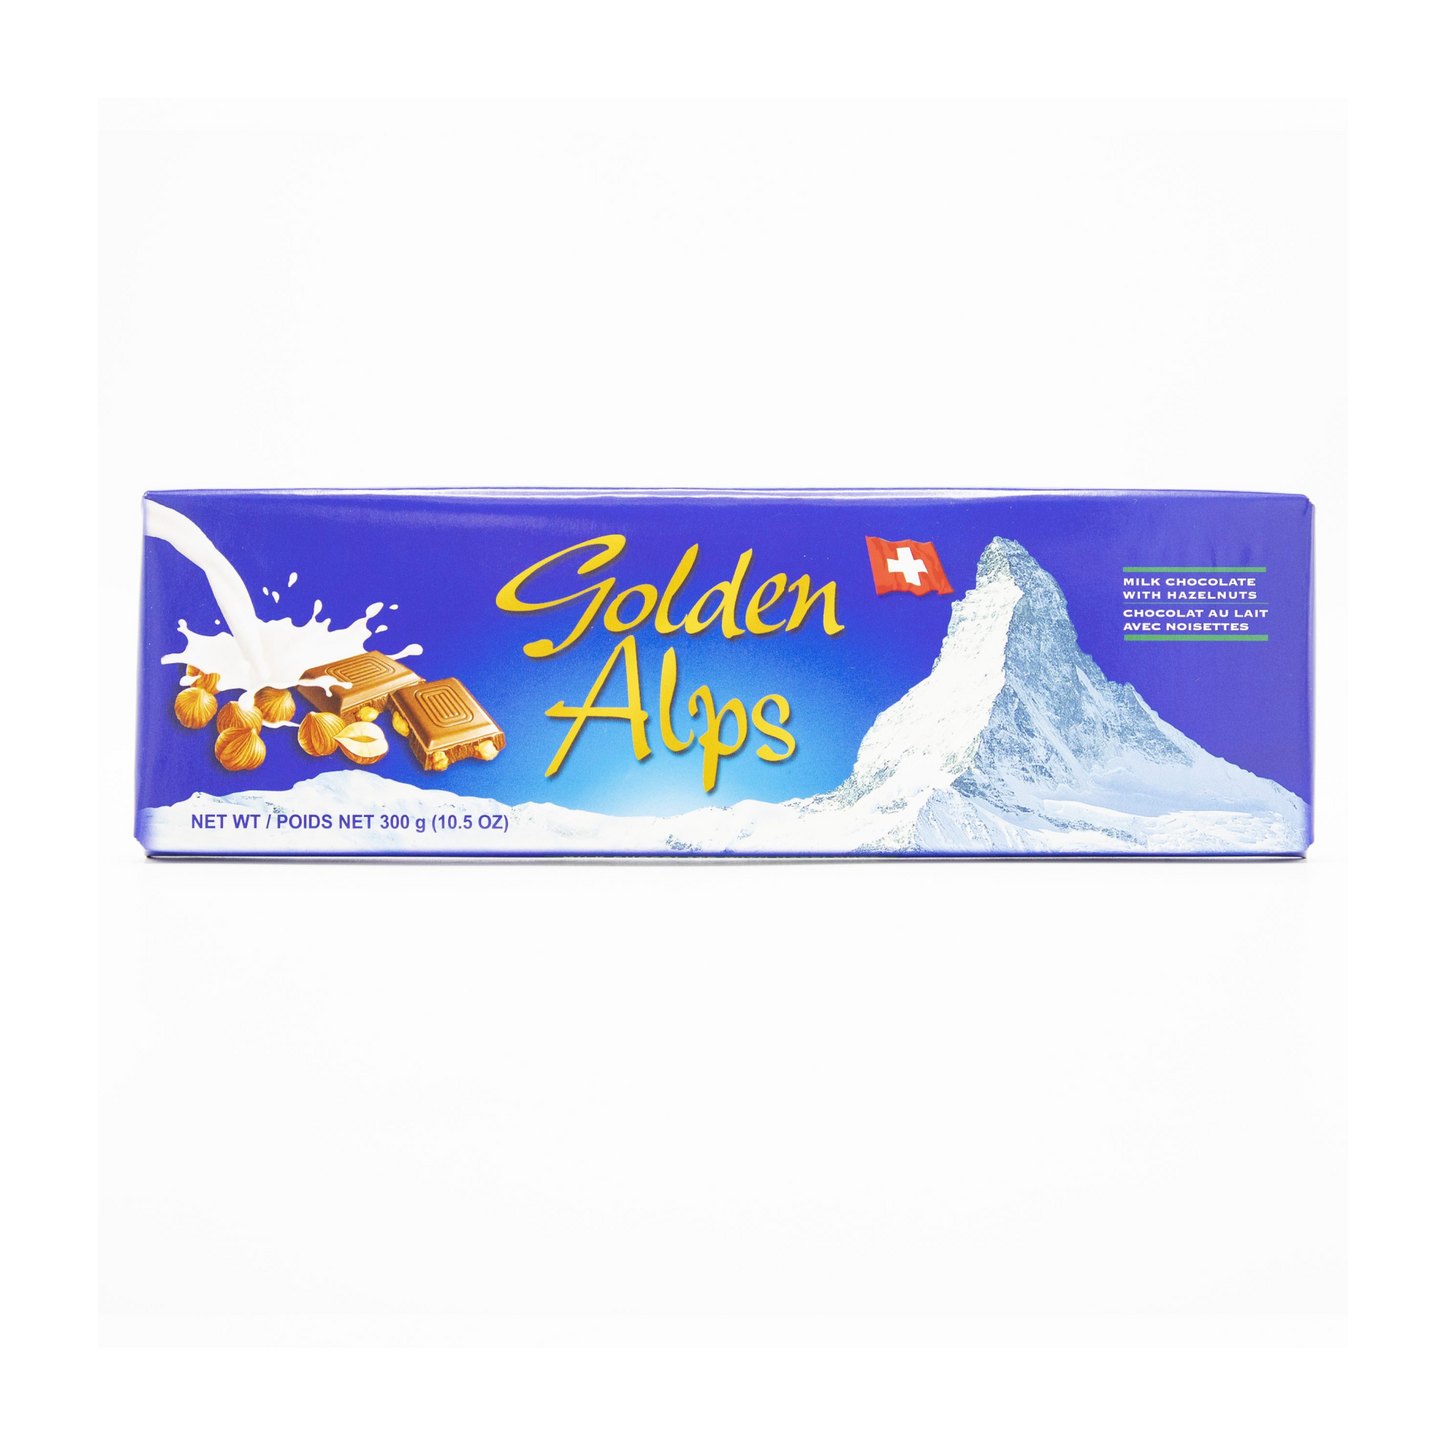 Golden Alps Milk Chocolate with Hazelnuts 300g